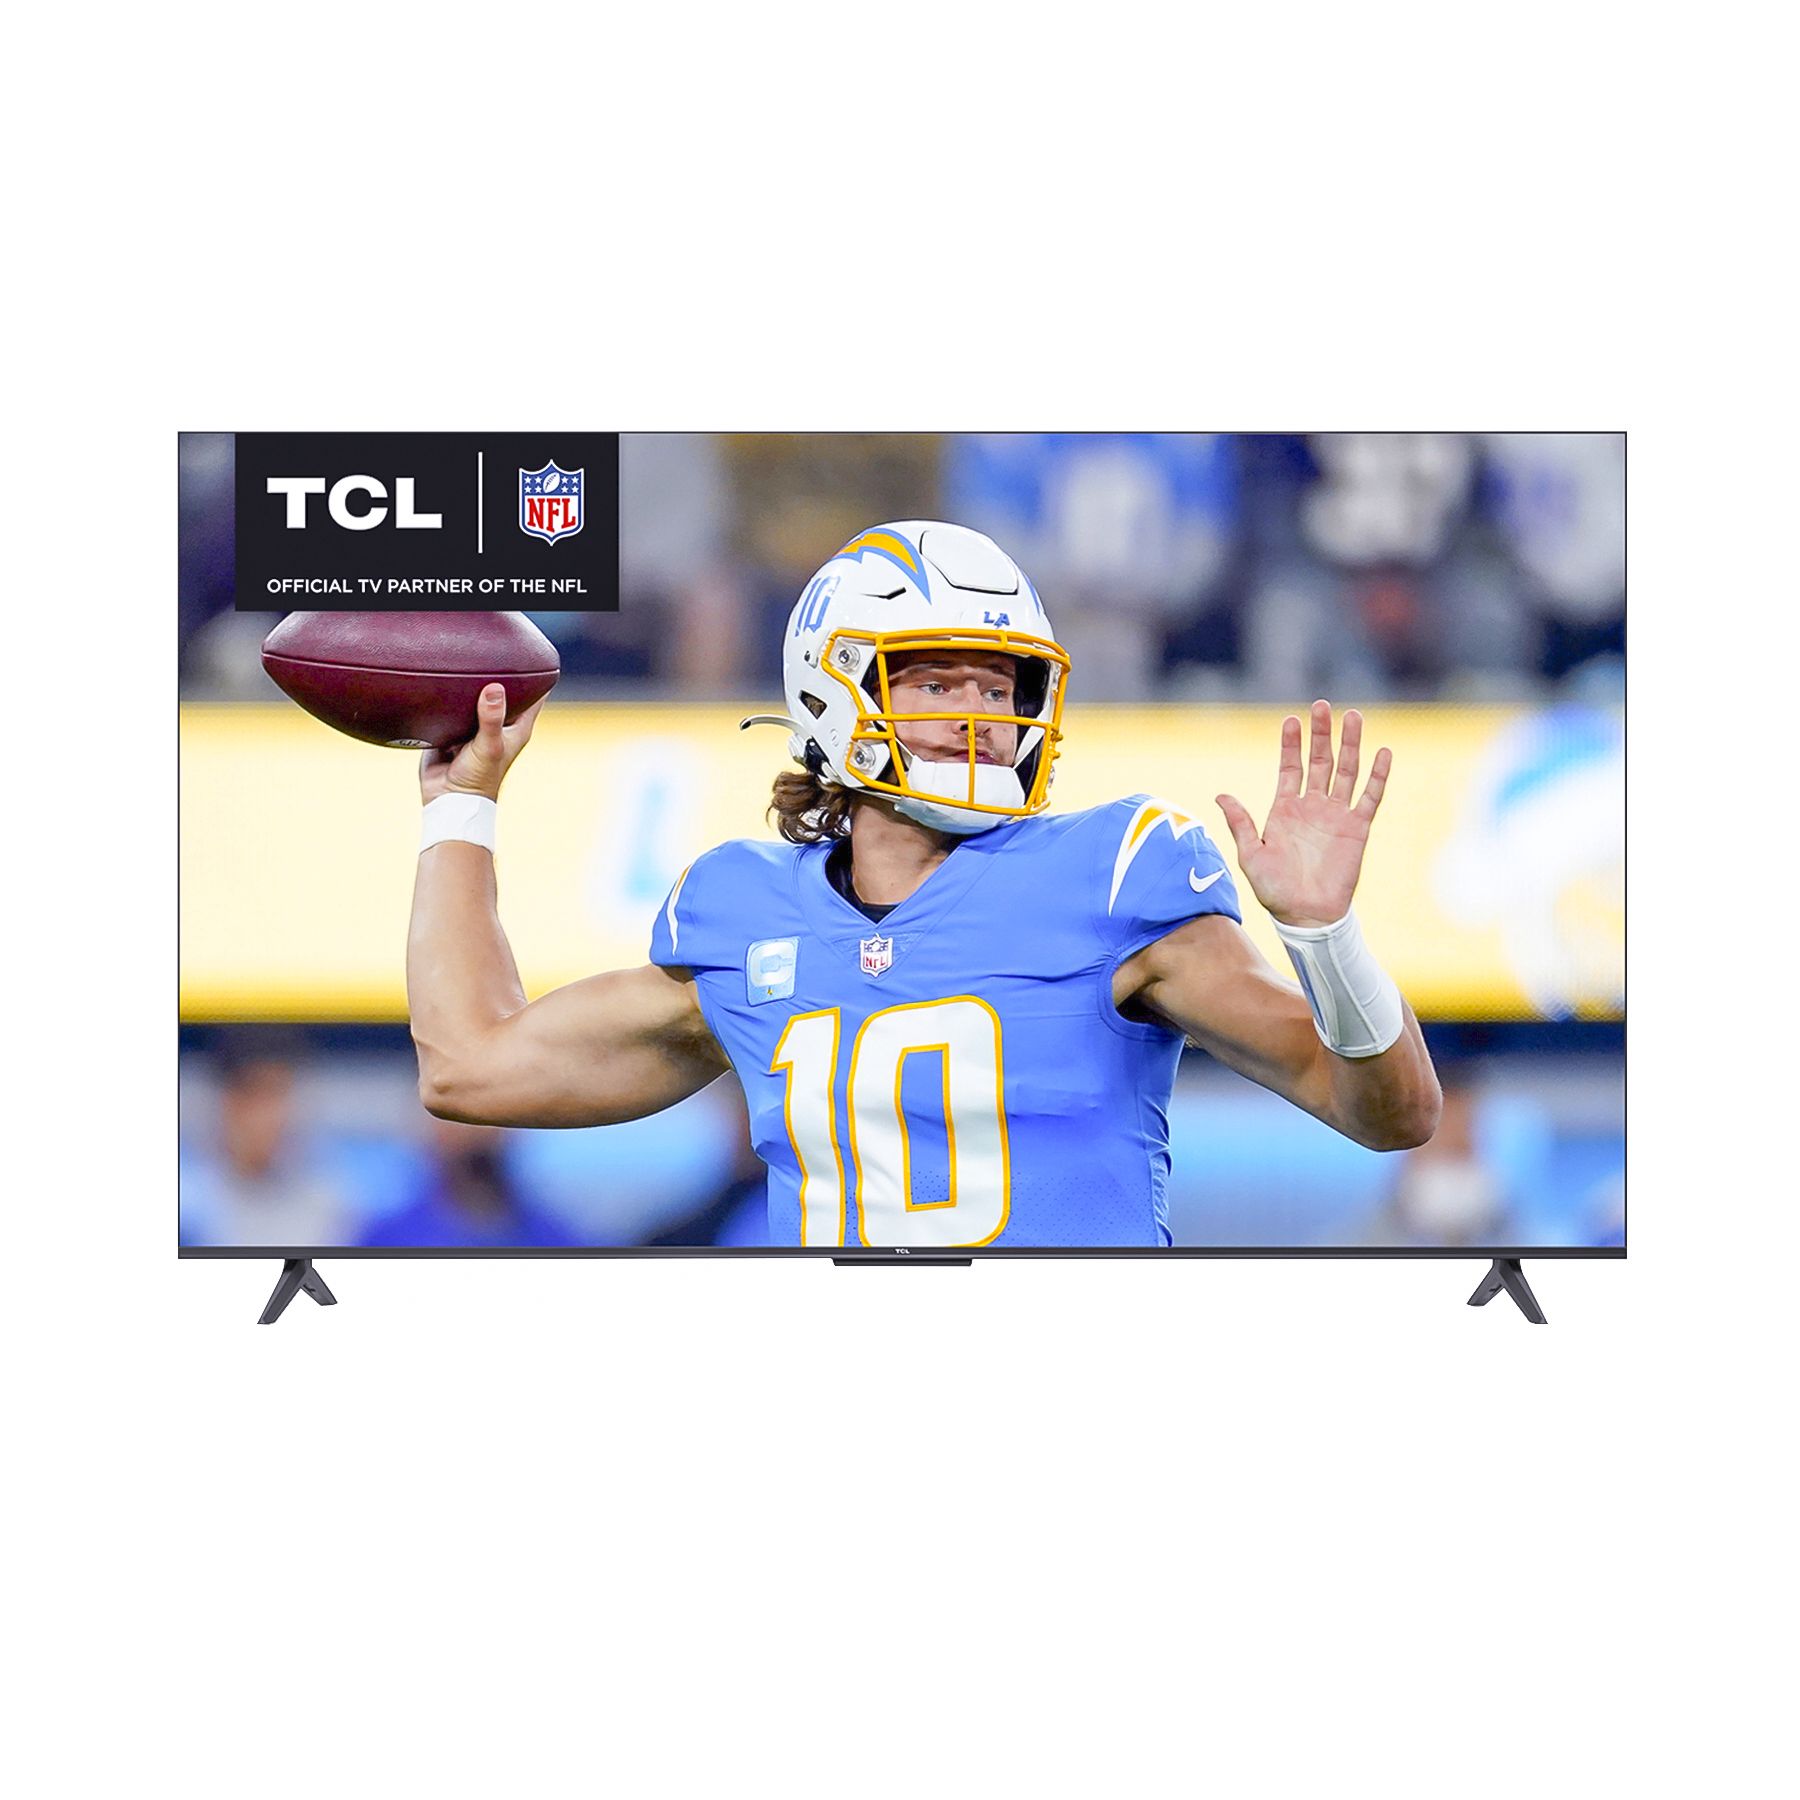 Pantalla TCL 65 4K Smart TV LED Roku TV –